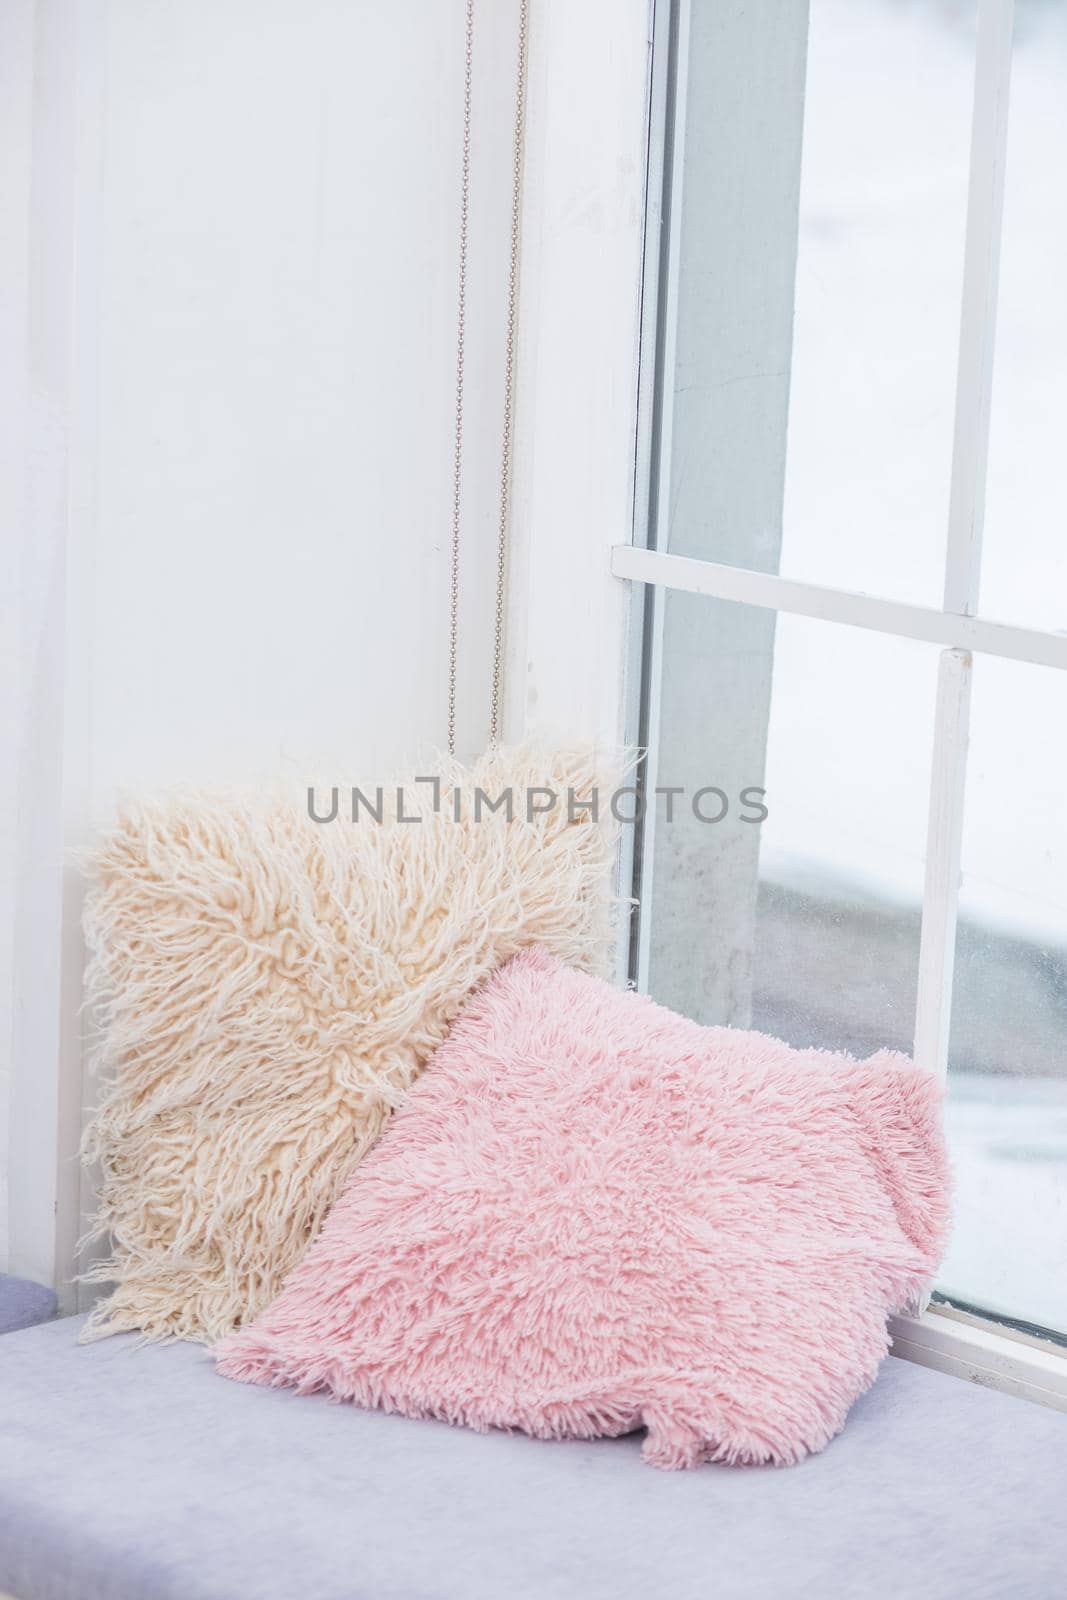 Decorative pillows with long pile pillowcases lie on the windowsill by galinasharapova